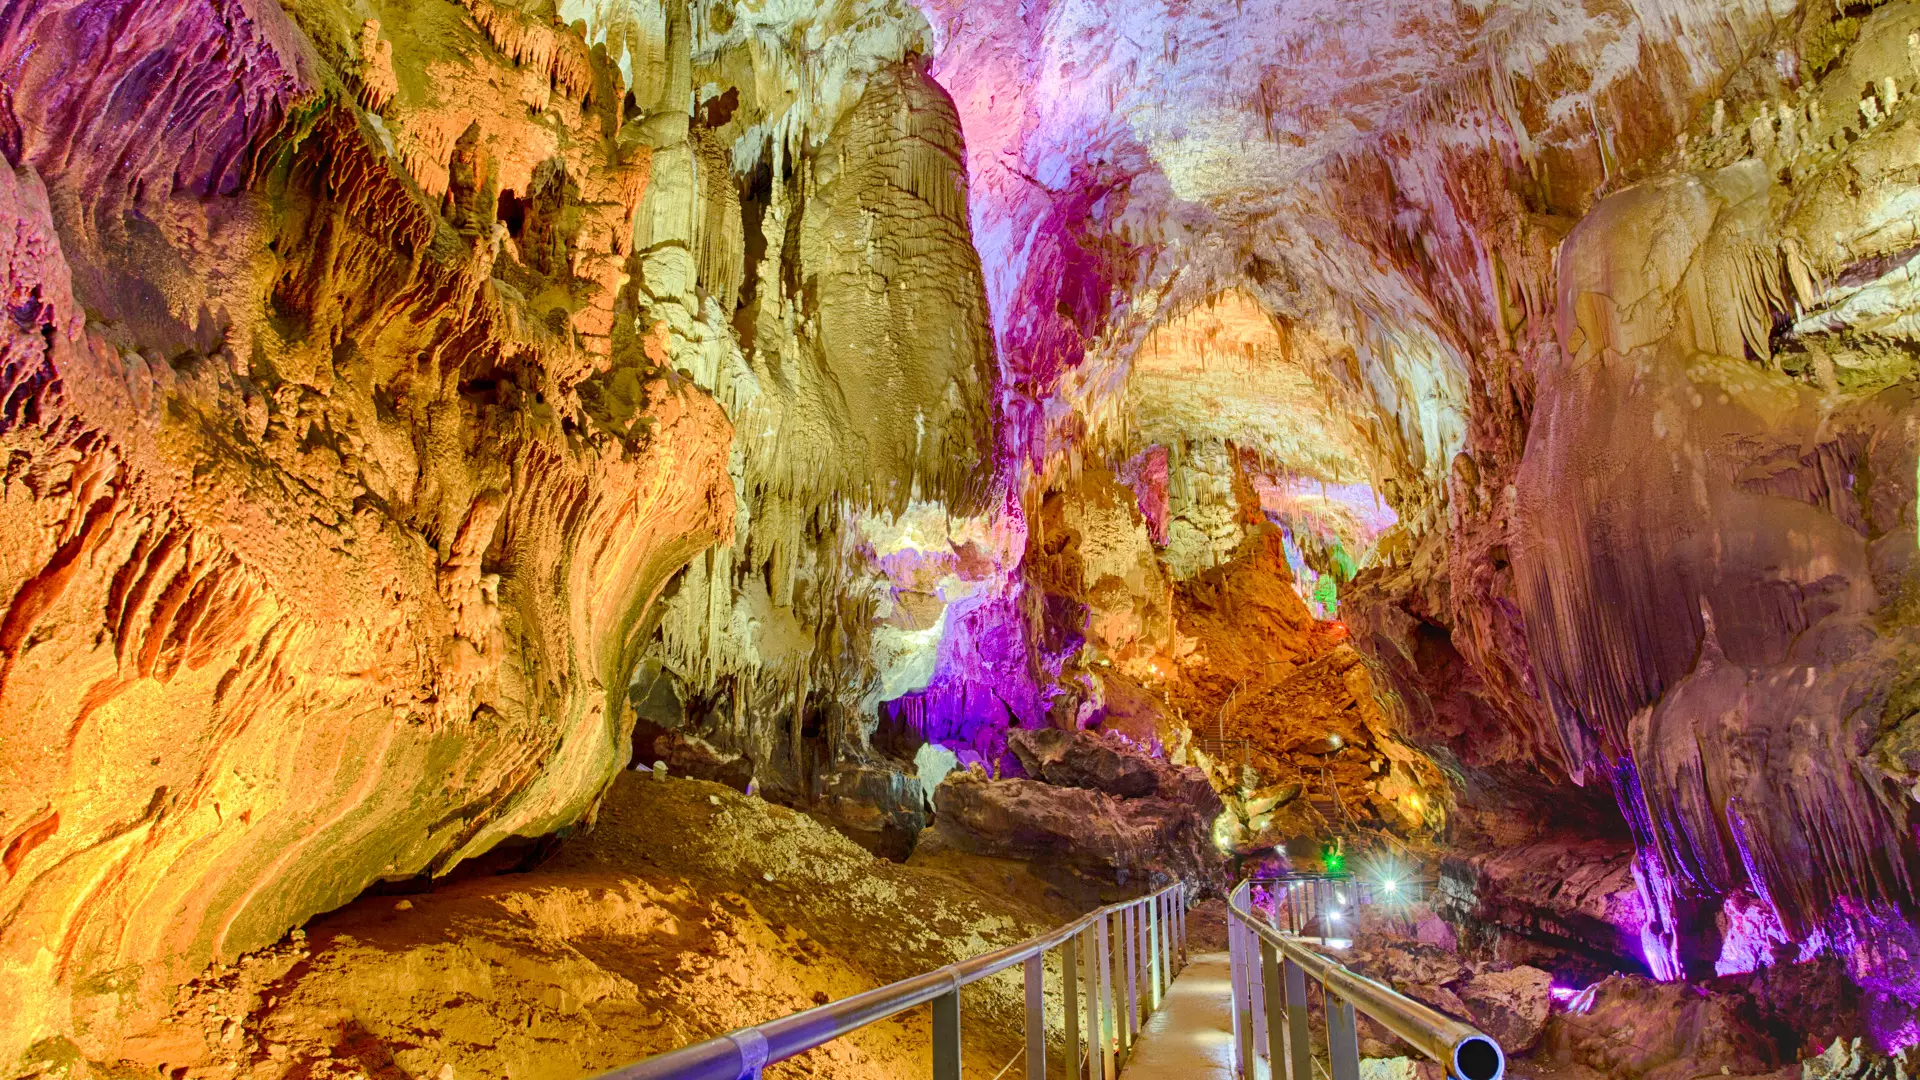 Prometheus Cave - Nature’s Gift to Adventurous Travelers